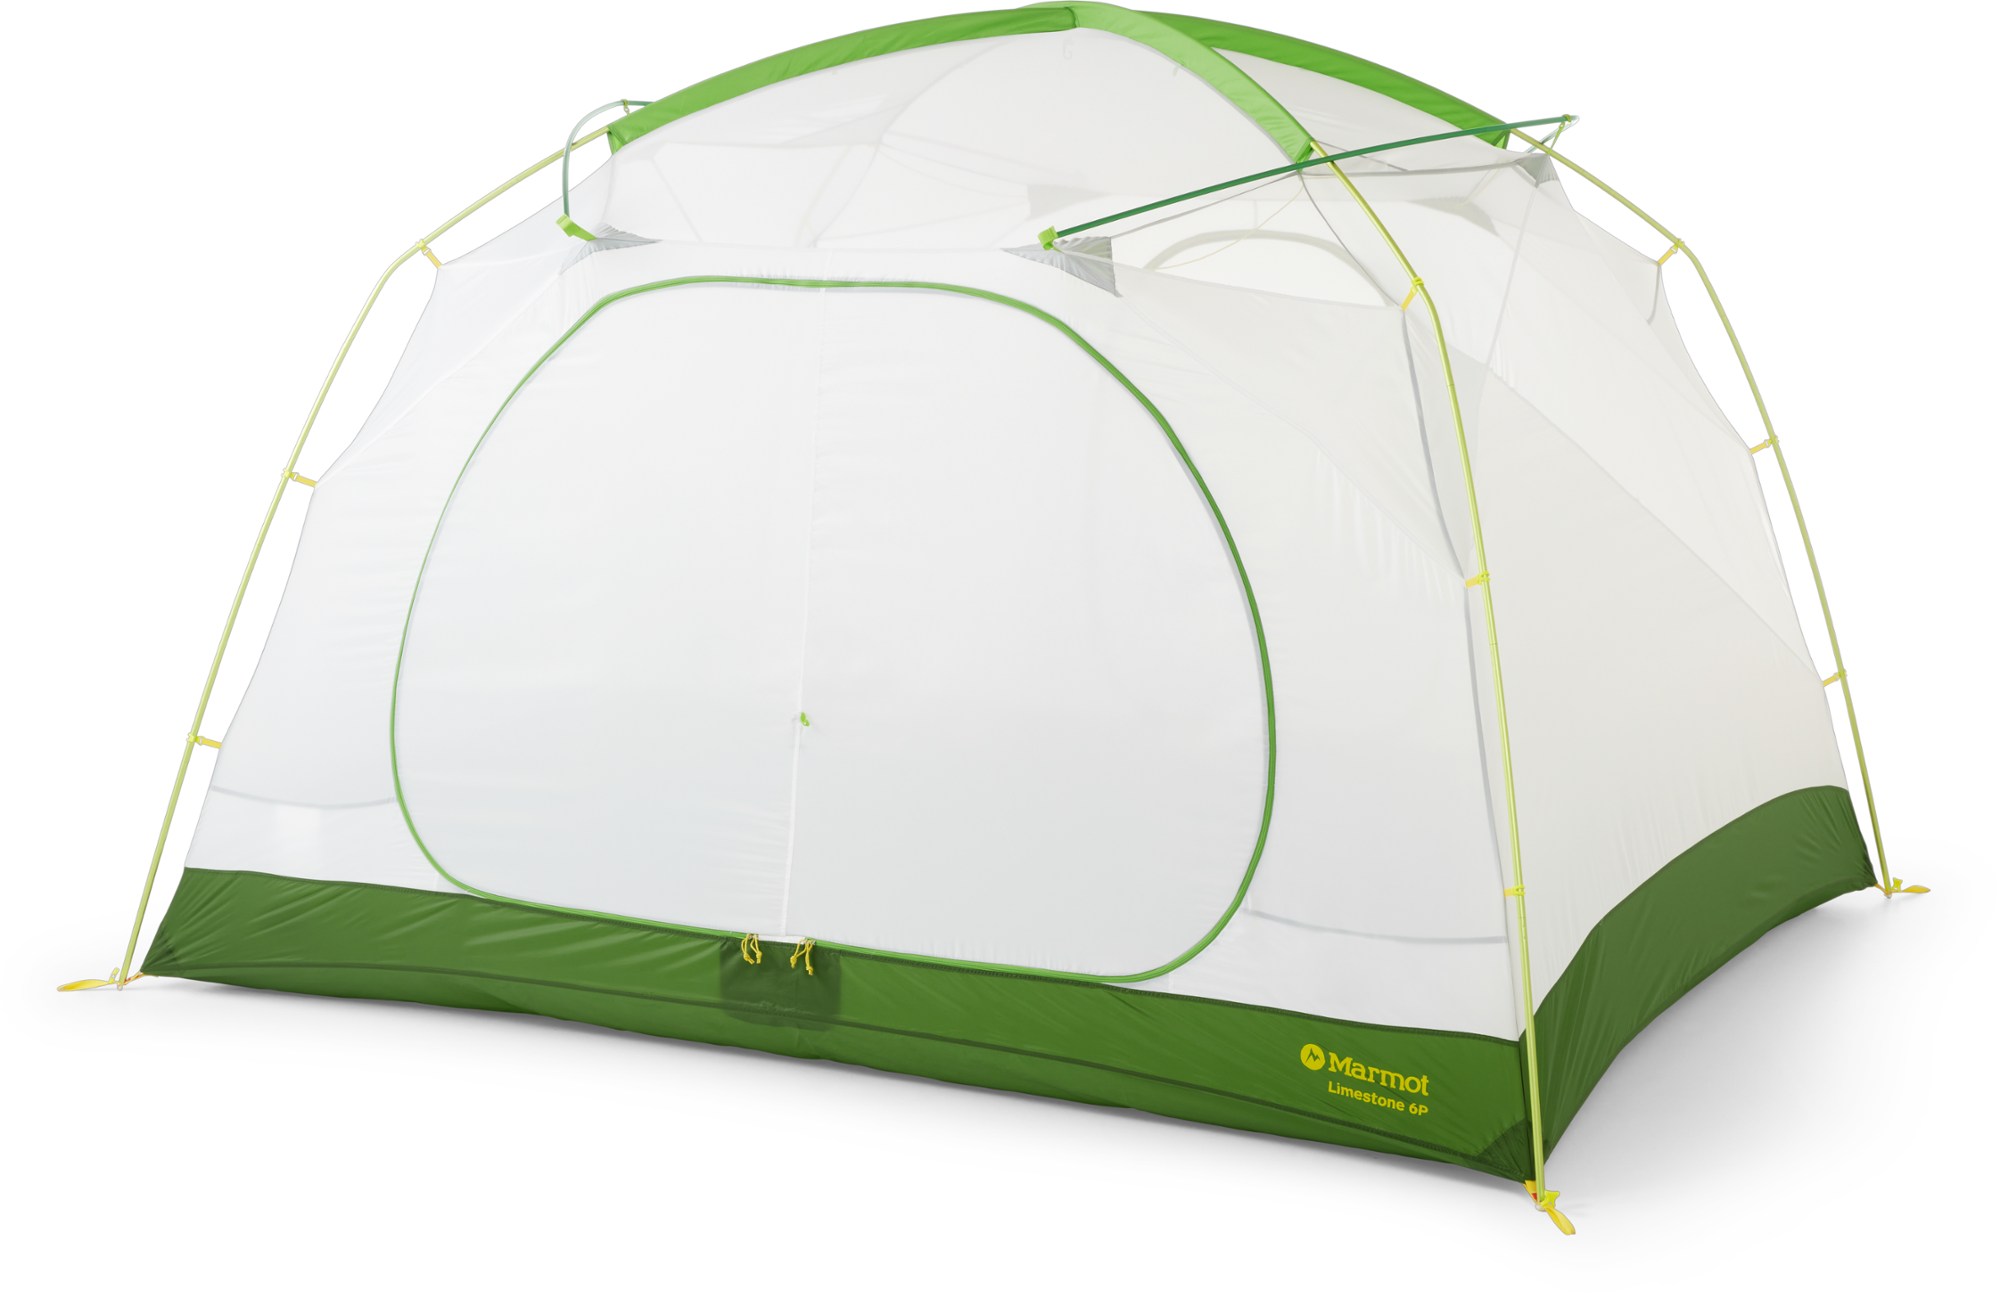 Marmot Limestone 6P camping tent